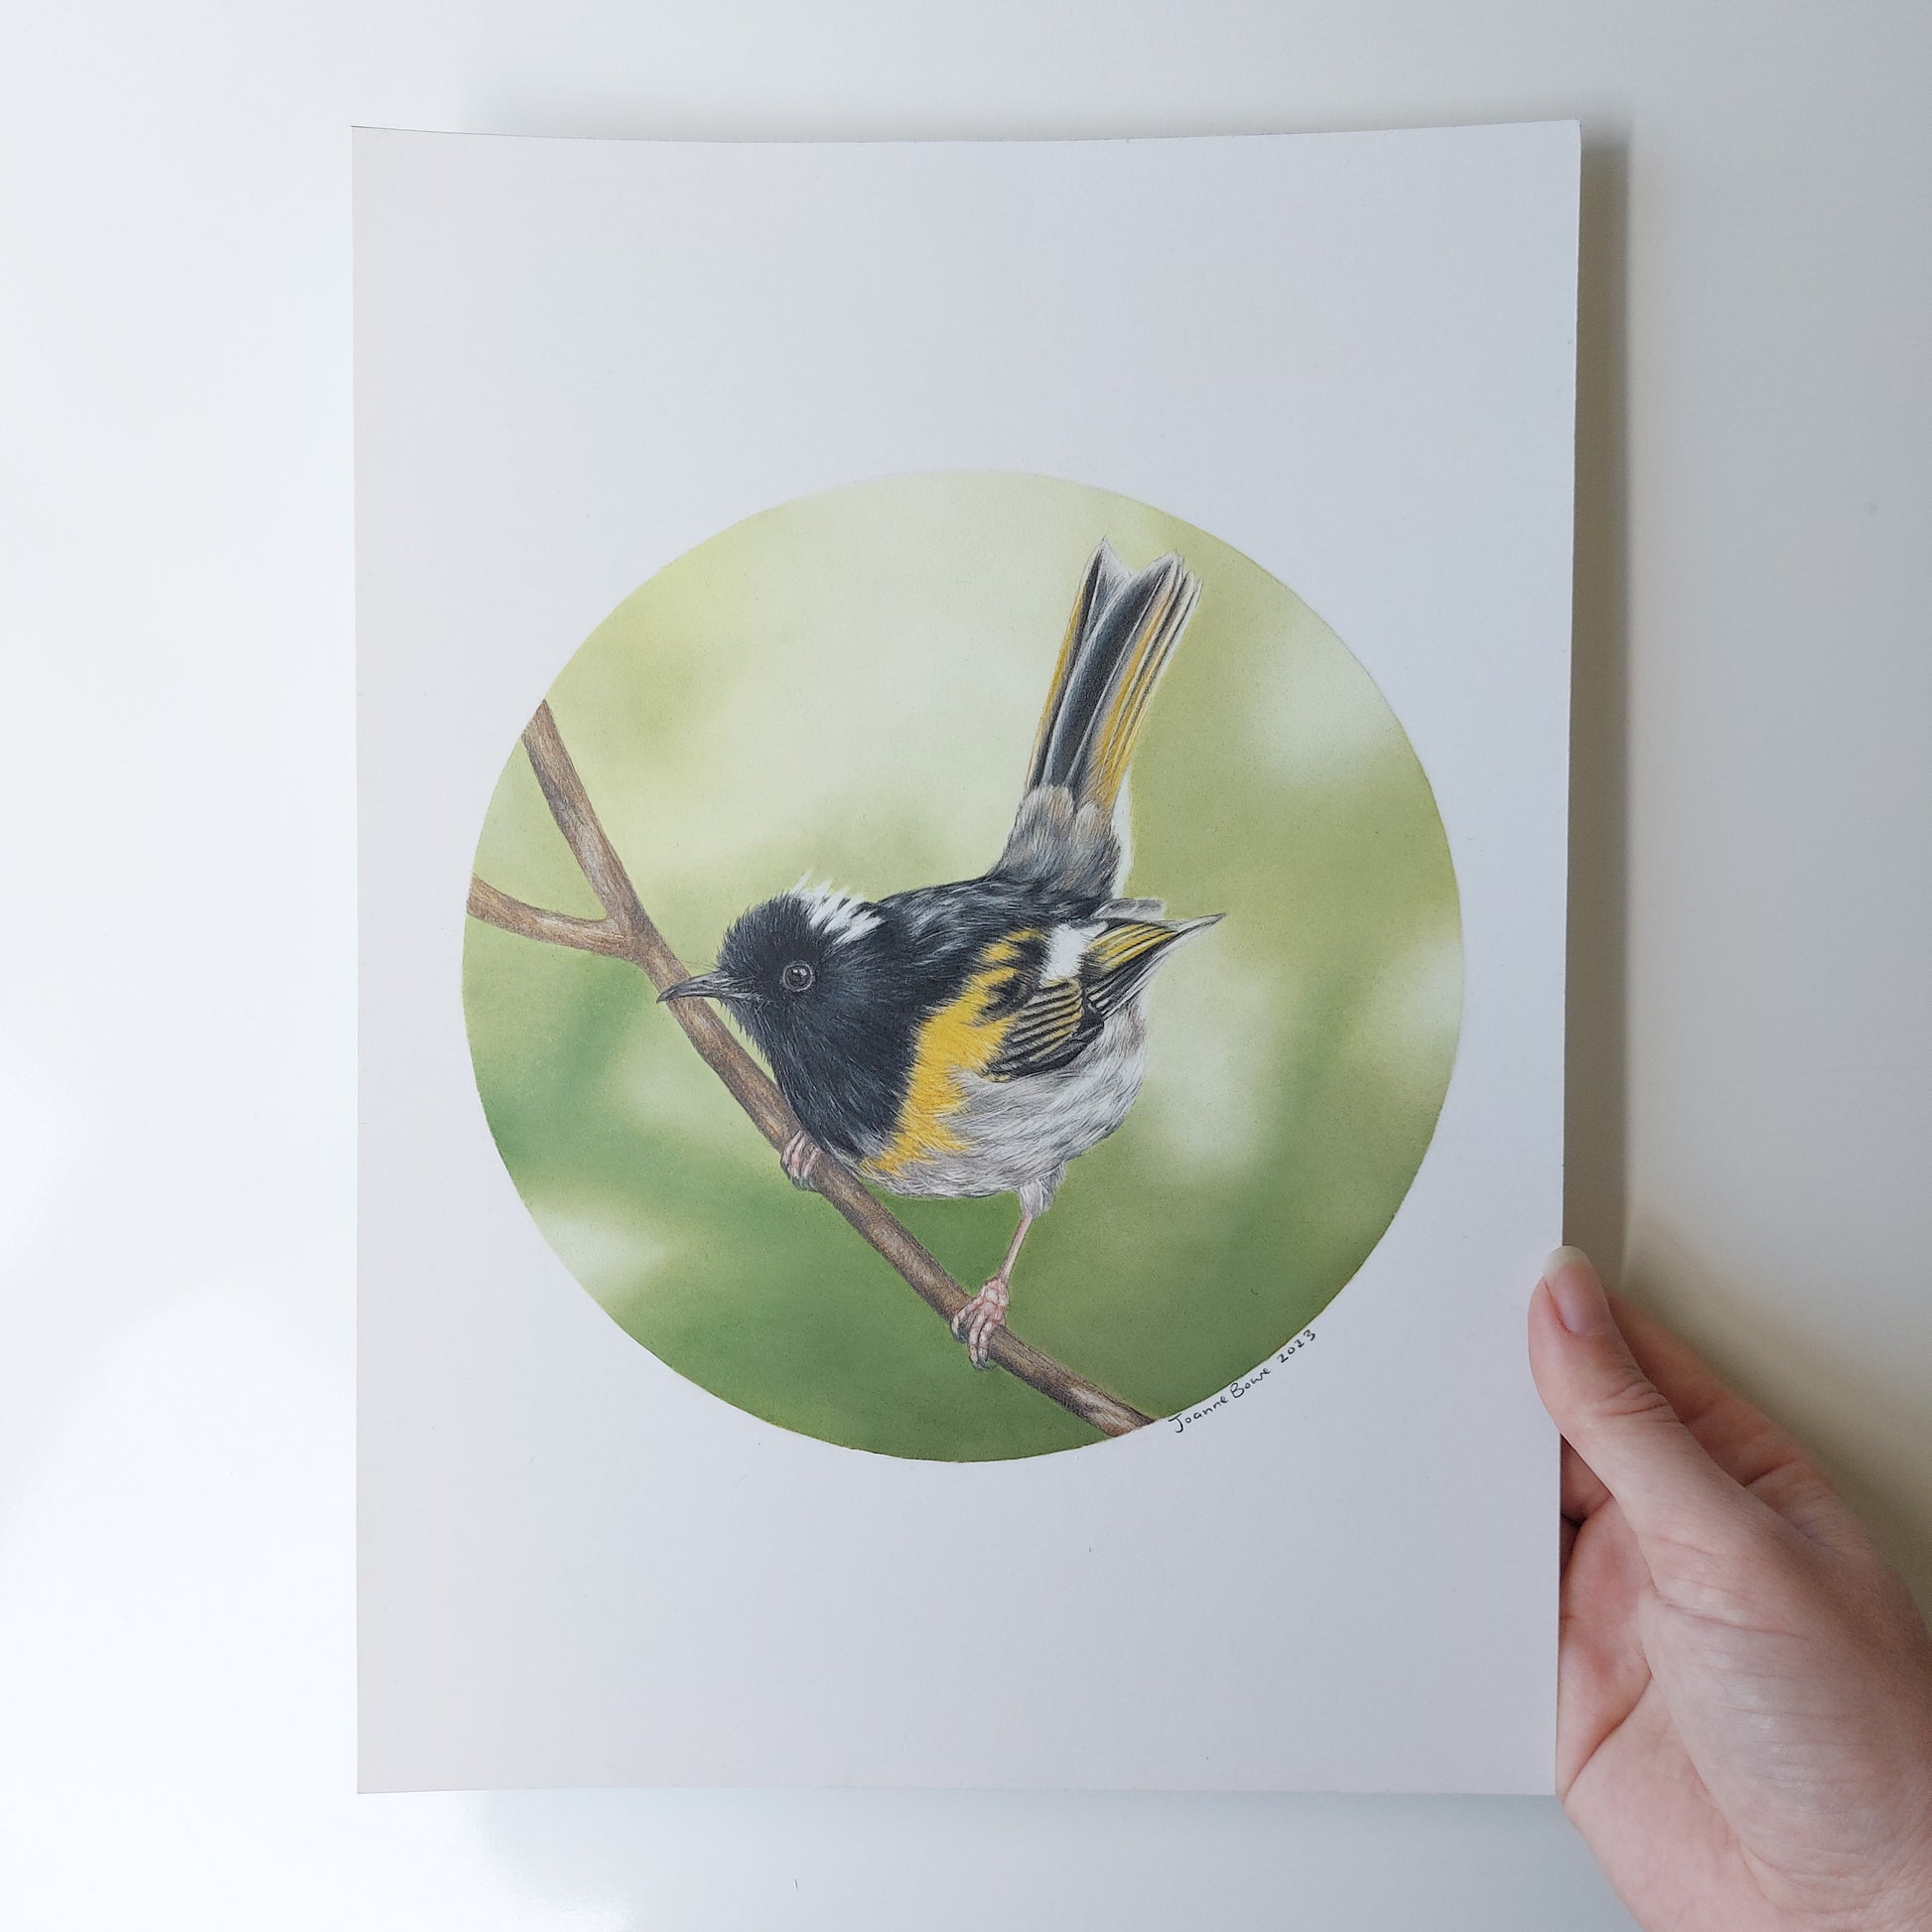 Stitchbird ORIGINAL - Joanne Bowe | New Zealand Artist